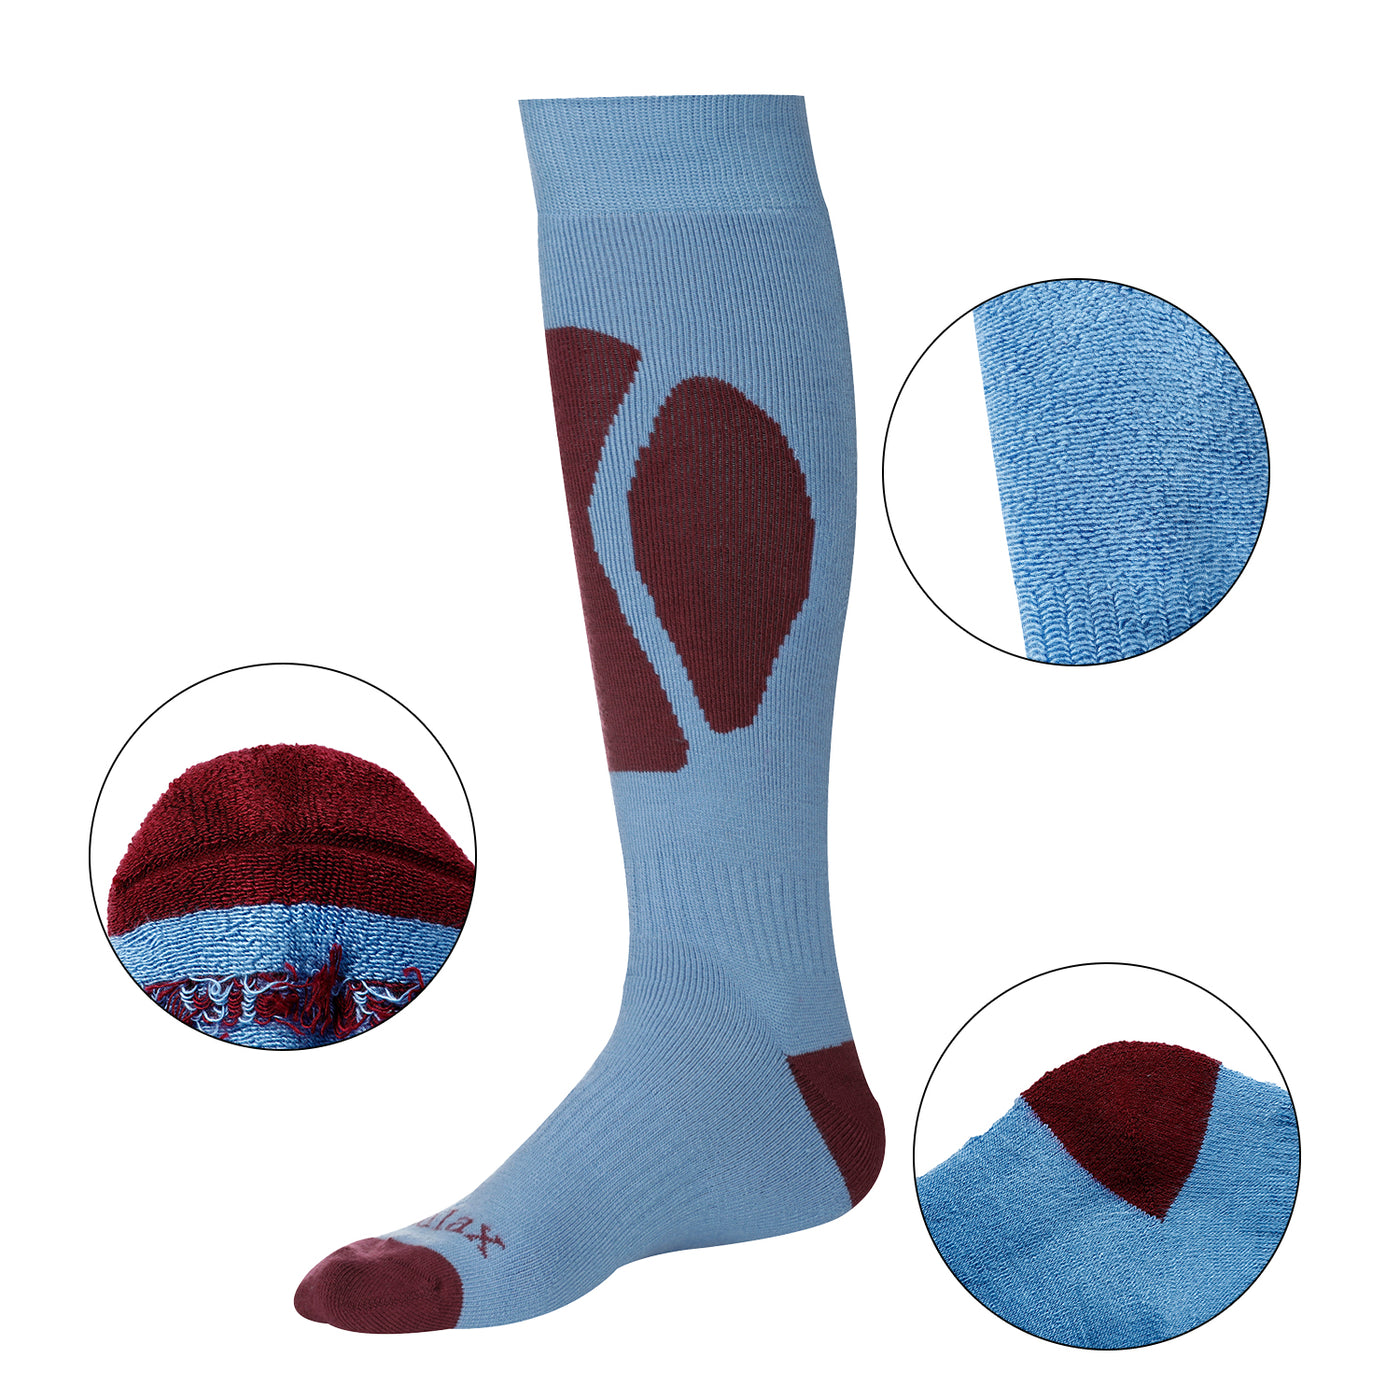 3 Pairs Cashmere-Like Long Hose Thermal Men's Ski Socks, Black, Blue, Grey, Gift Set